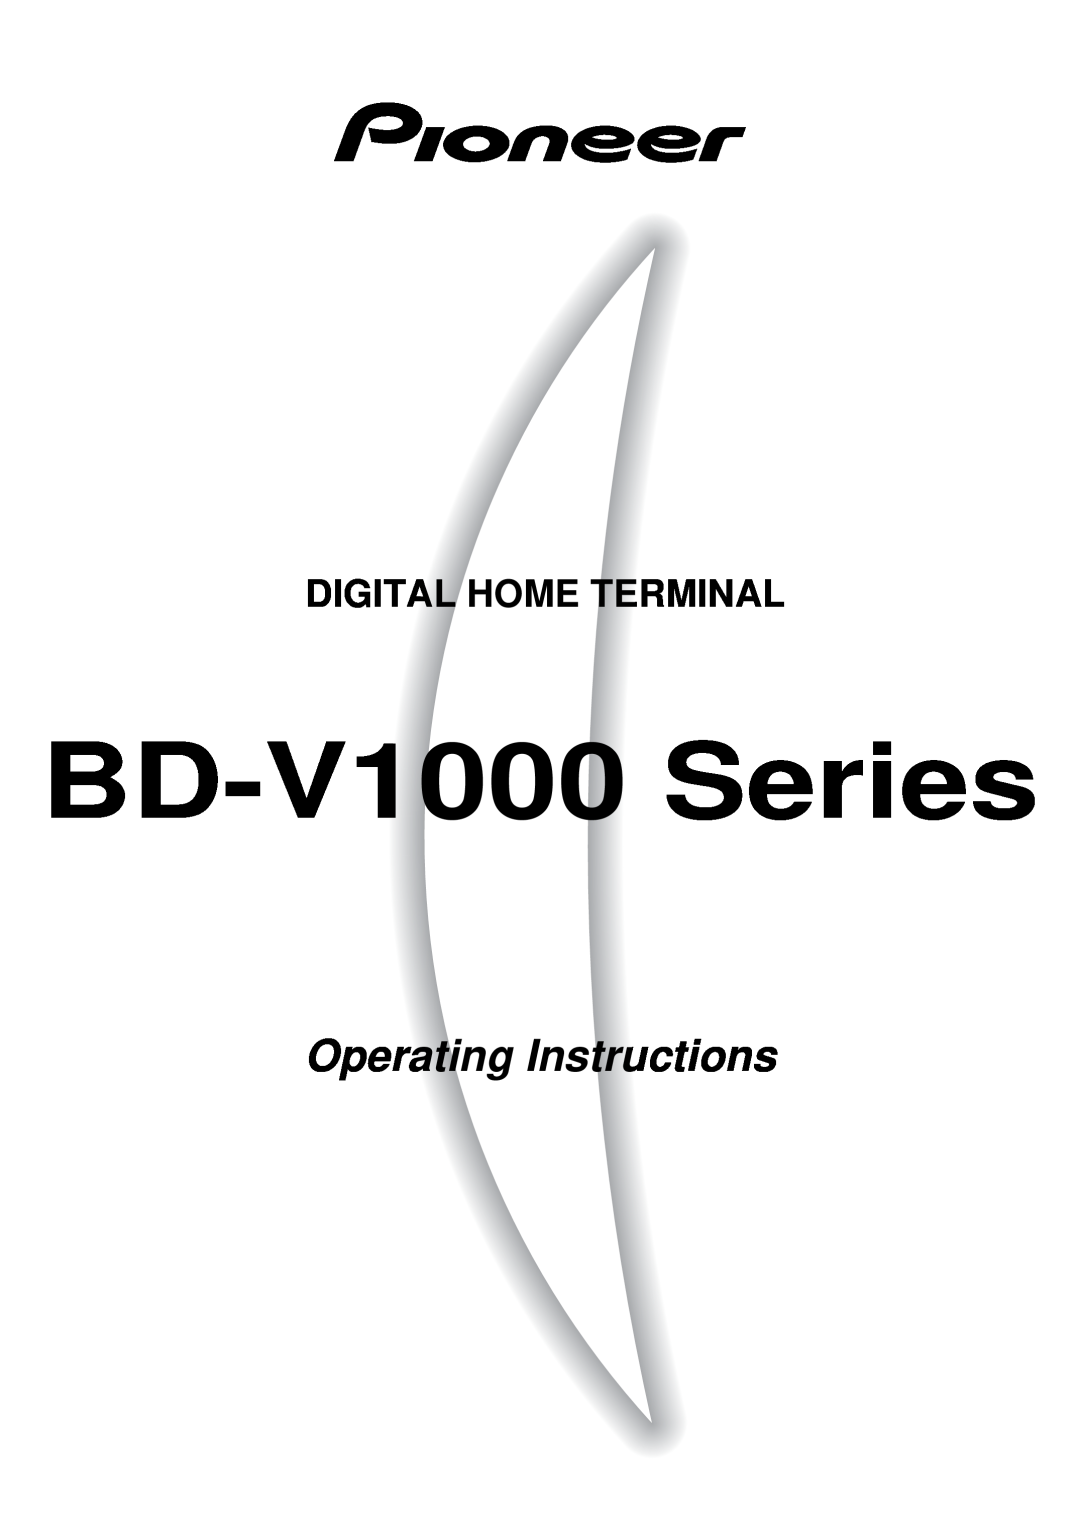 Pioneer Industrial BD-V1000 Series operating instructions BD-V1000Series, Operating Instructions, Digital Home Terminal 